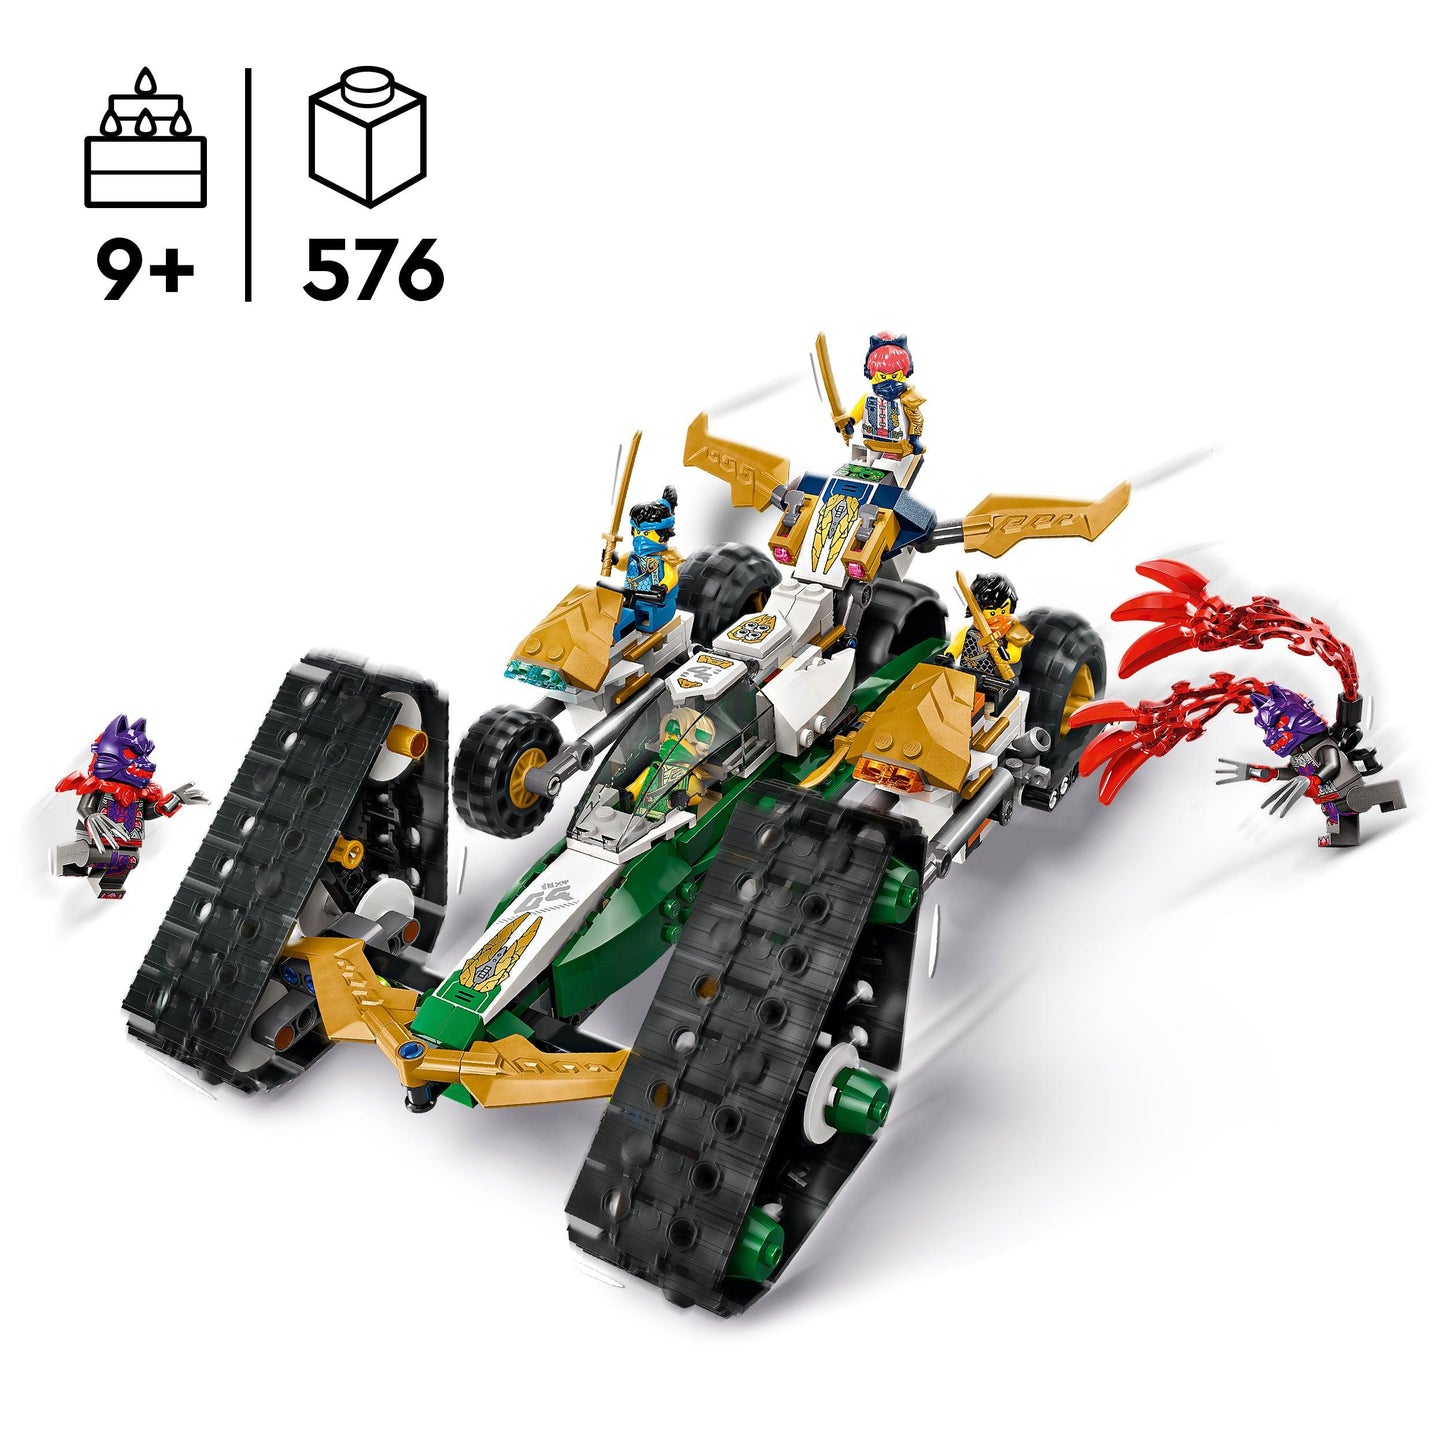 LEGO Ninja Team Combi Rups 71820 Ninjago (Pre-Order: verwacht juni) LEGO Ninjago @ 2TTOYS LEGO €. 76.49